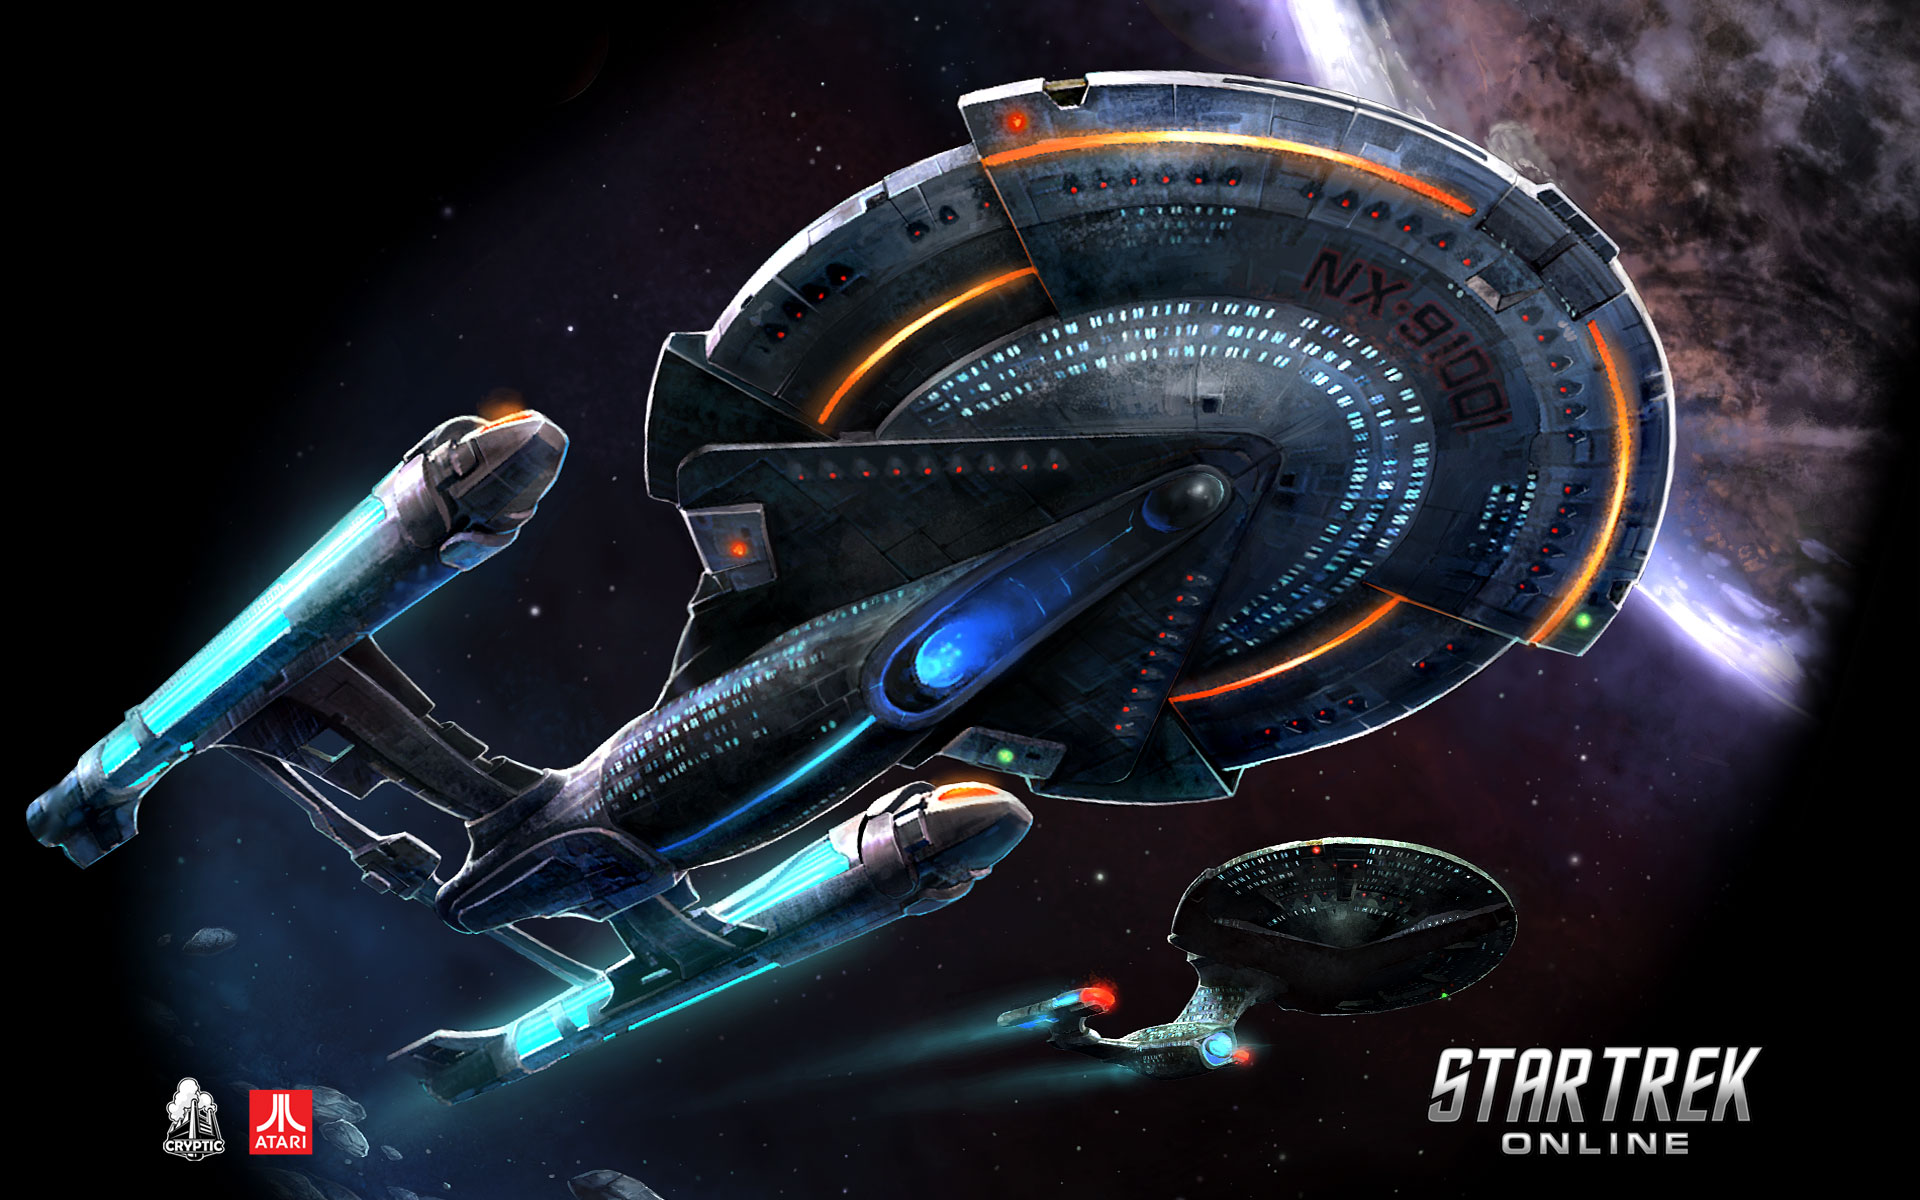 Star Trek Online Wallpaper Hd New Star Trek Backgrounds Hd Wallpaper Backgrounds Download